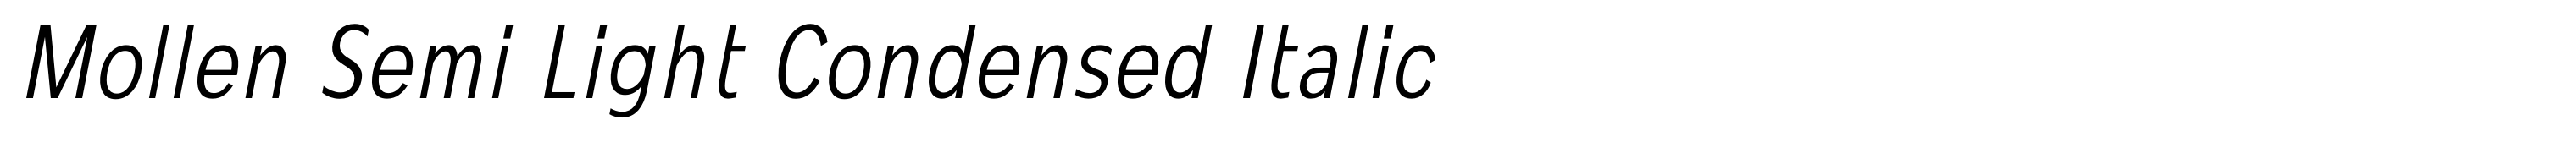 Mollen Semi Light Condensed Italic